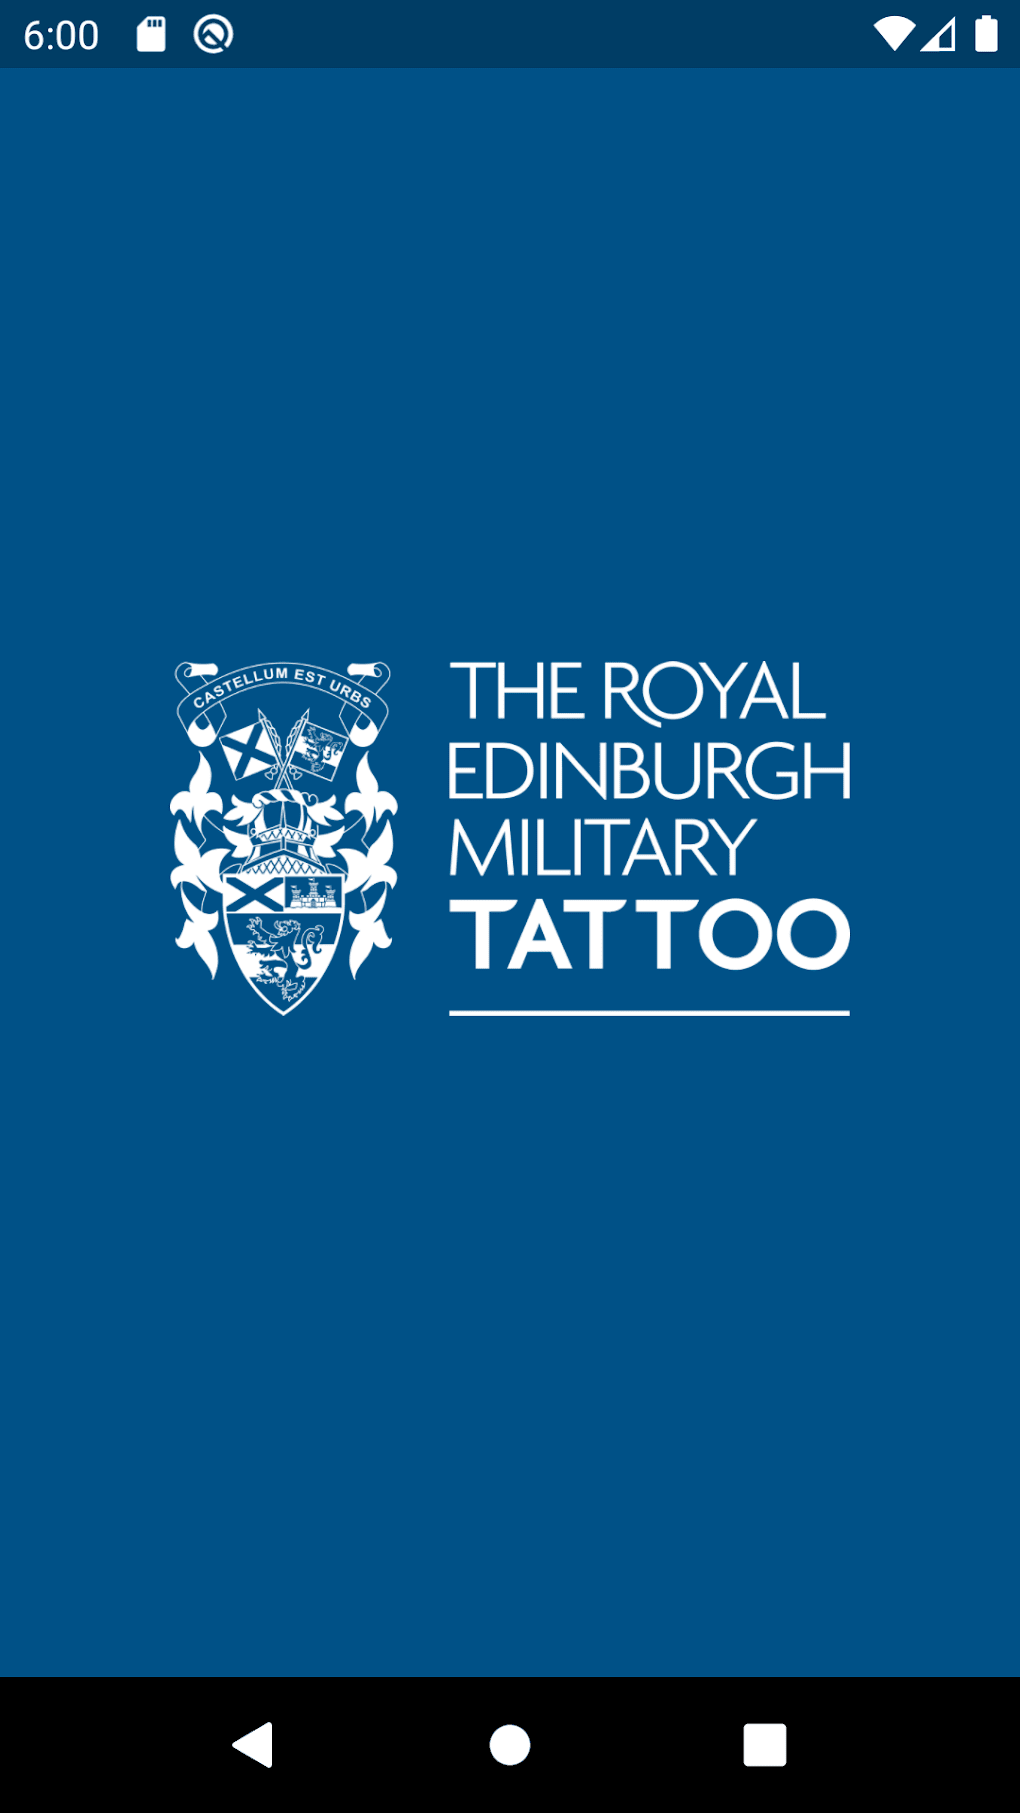 The Royal Edinburgh Military Tattoo in Australia